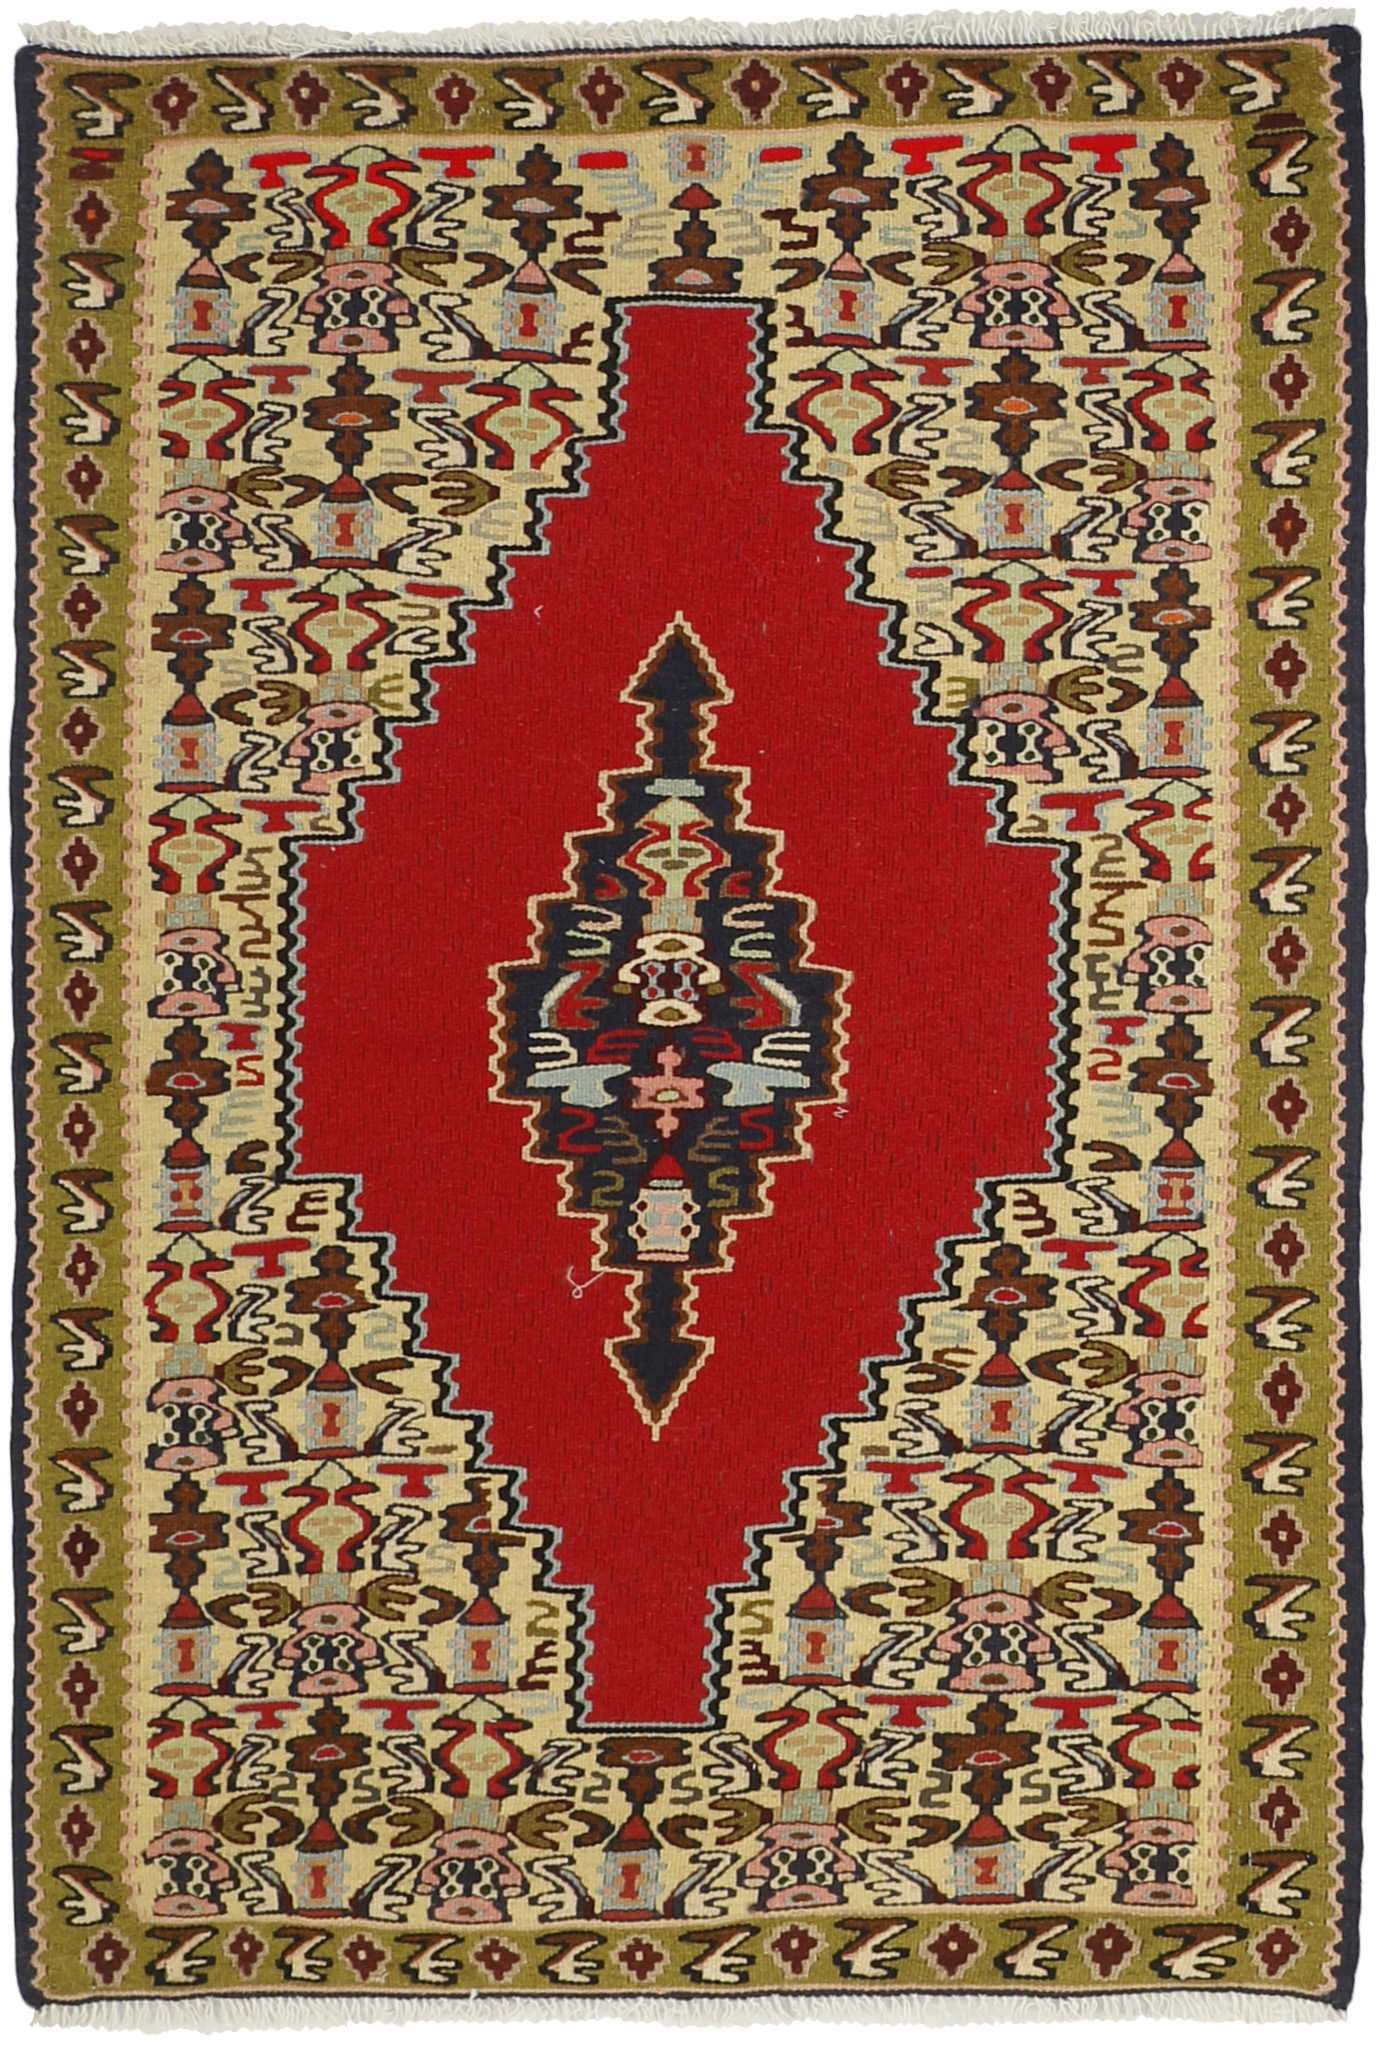 Rectangular natural beige rug with terracotta red, grey and black aztec design and black tassel border